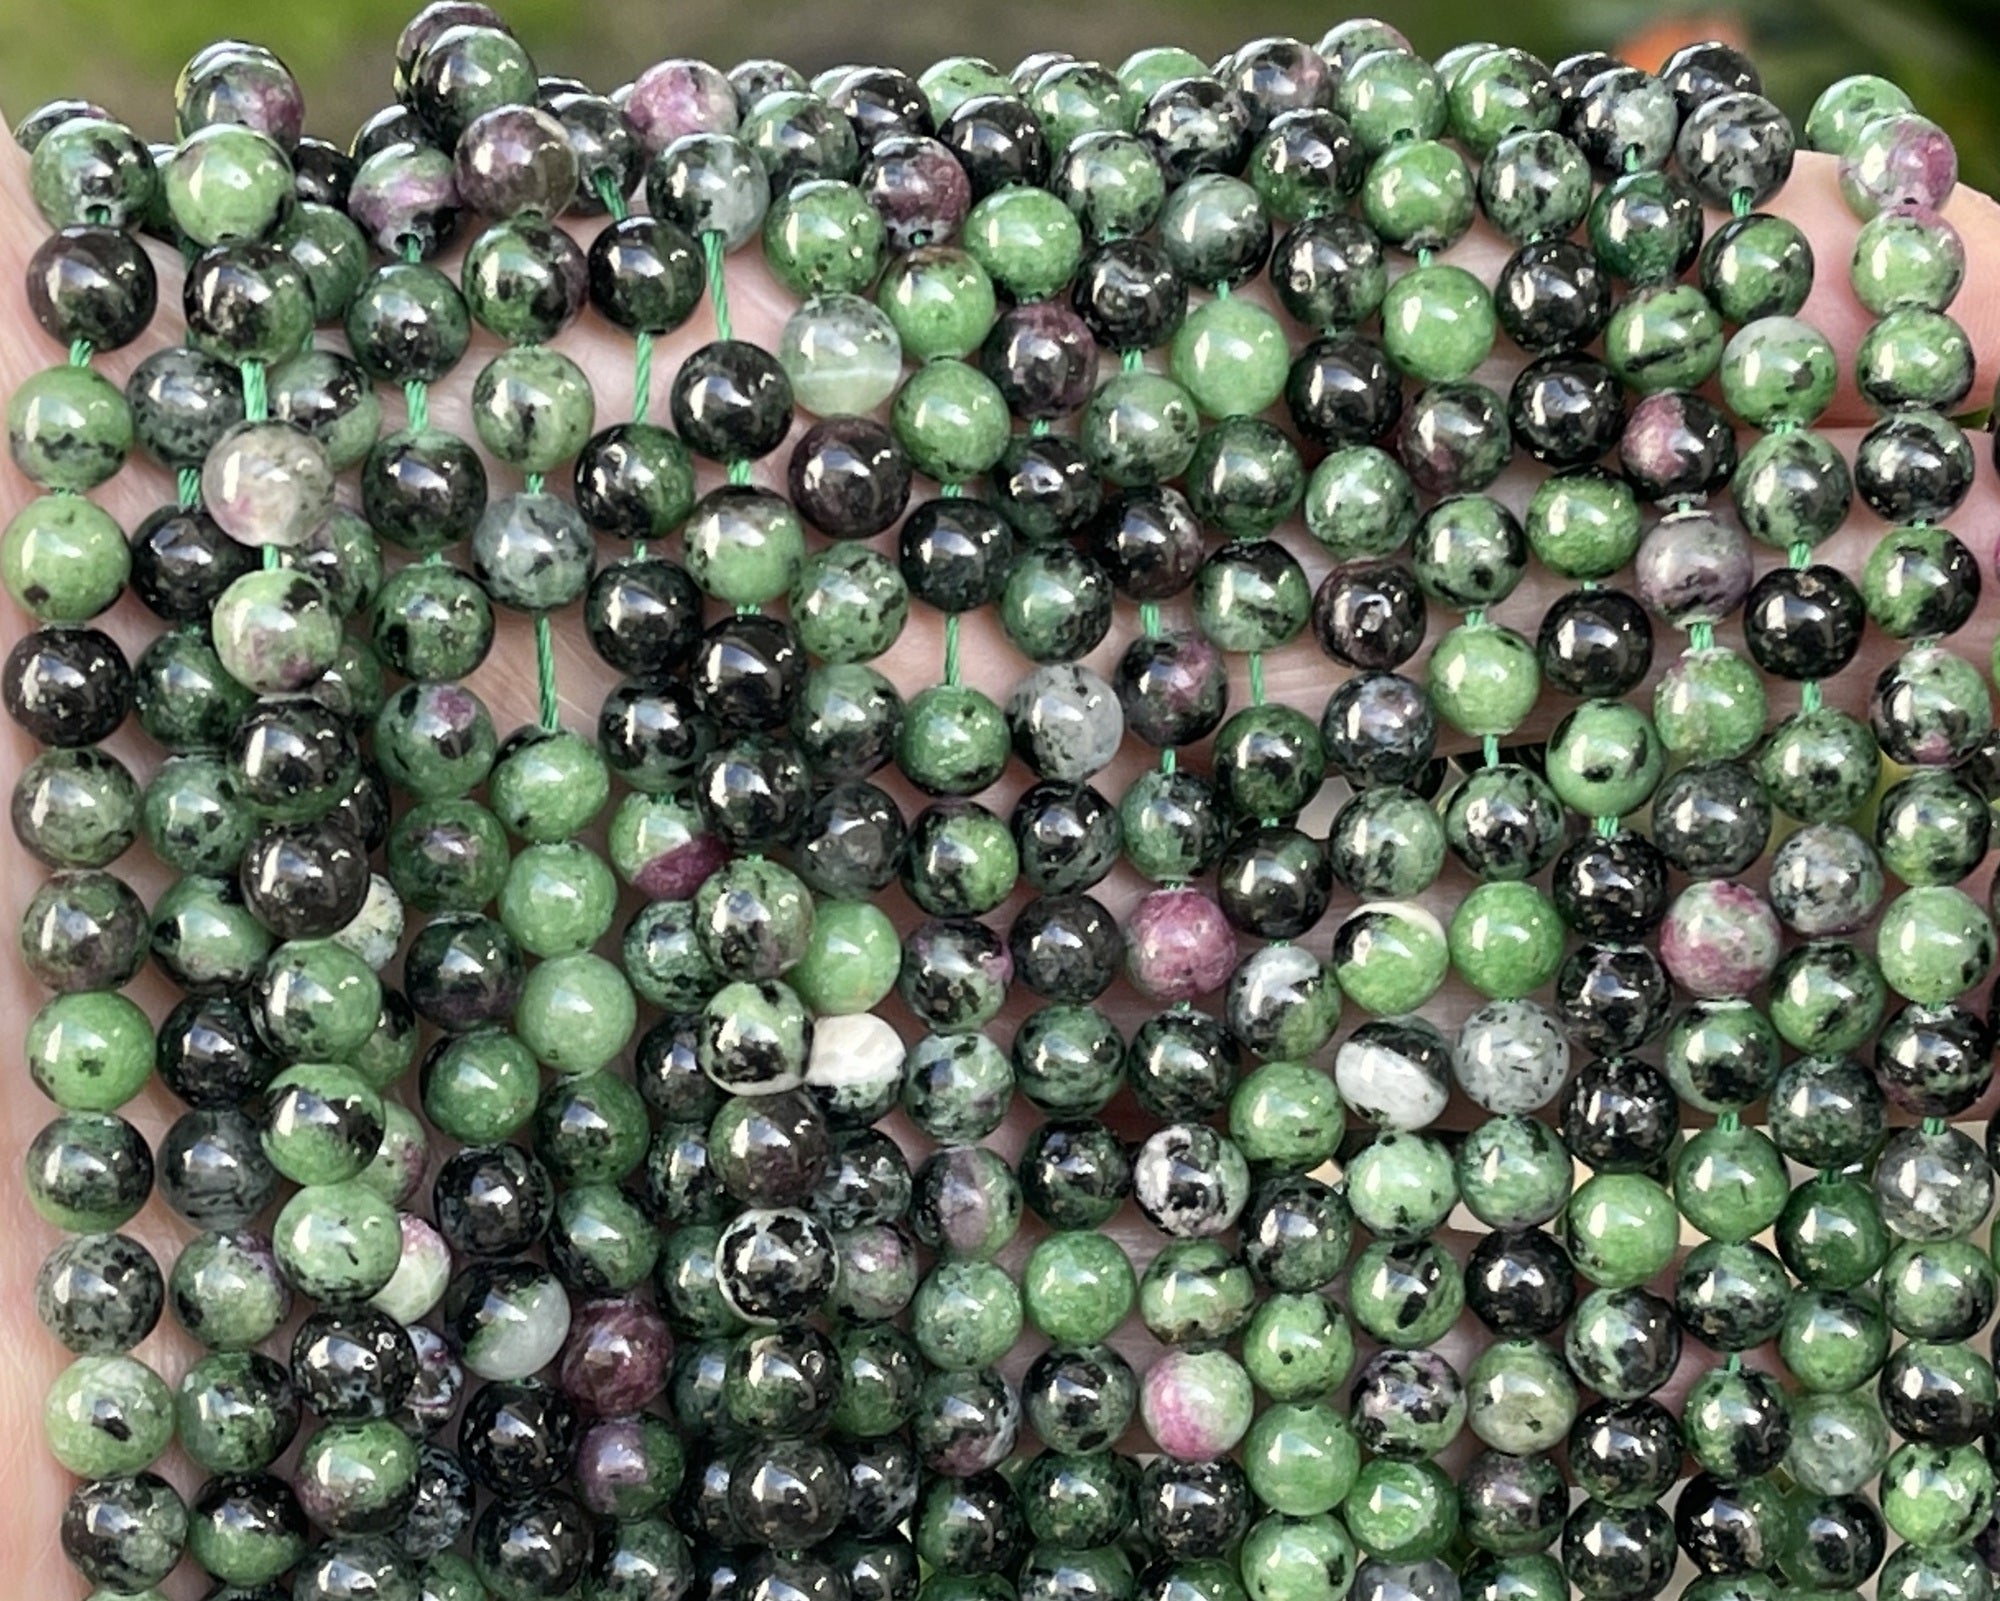 Ruby Zoisite 6mm round natural gemstone beads 15.5" strand - Oz Beads 